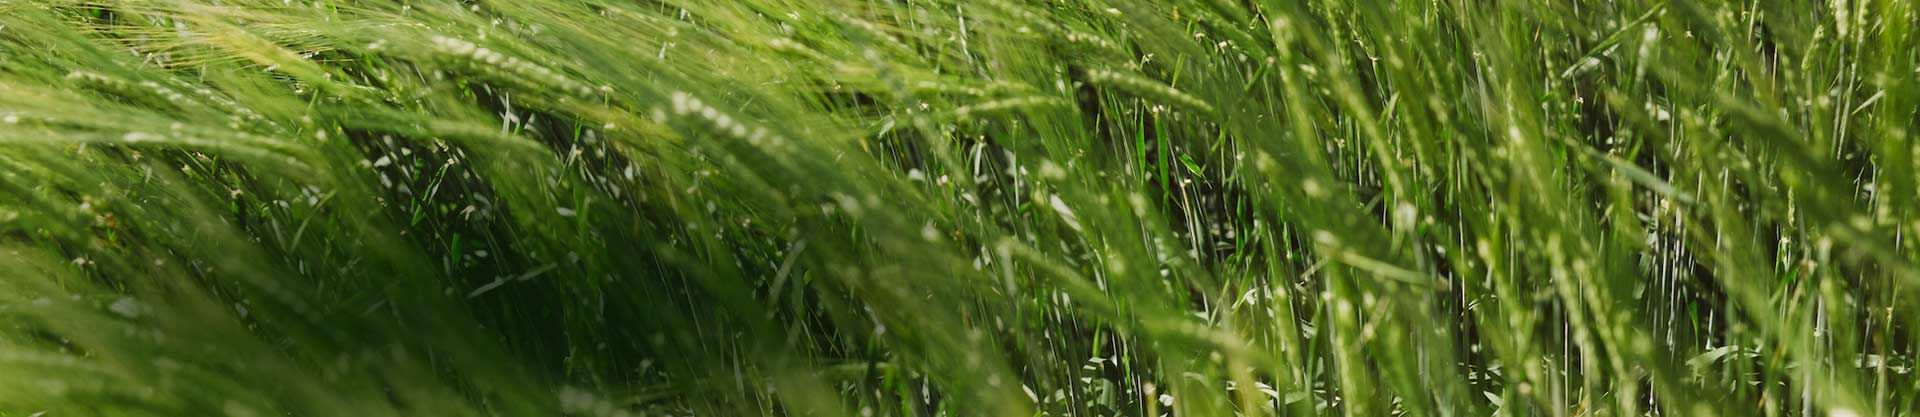 Enhancing excess moisture tolerance in barley through manipulation of phytoglobins